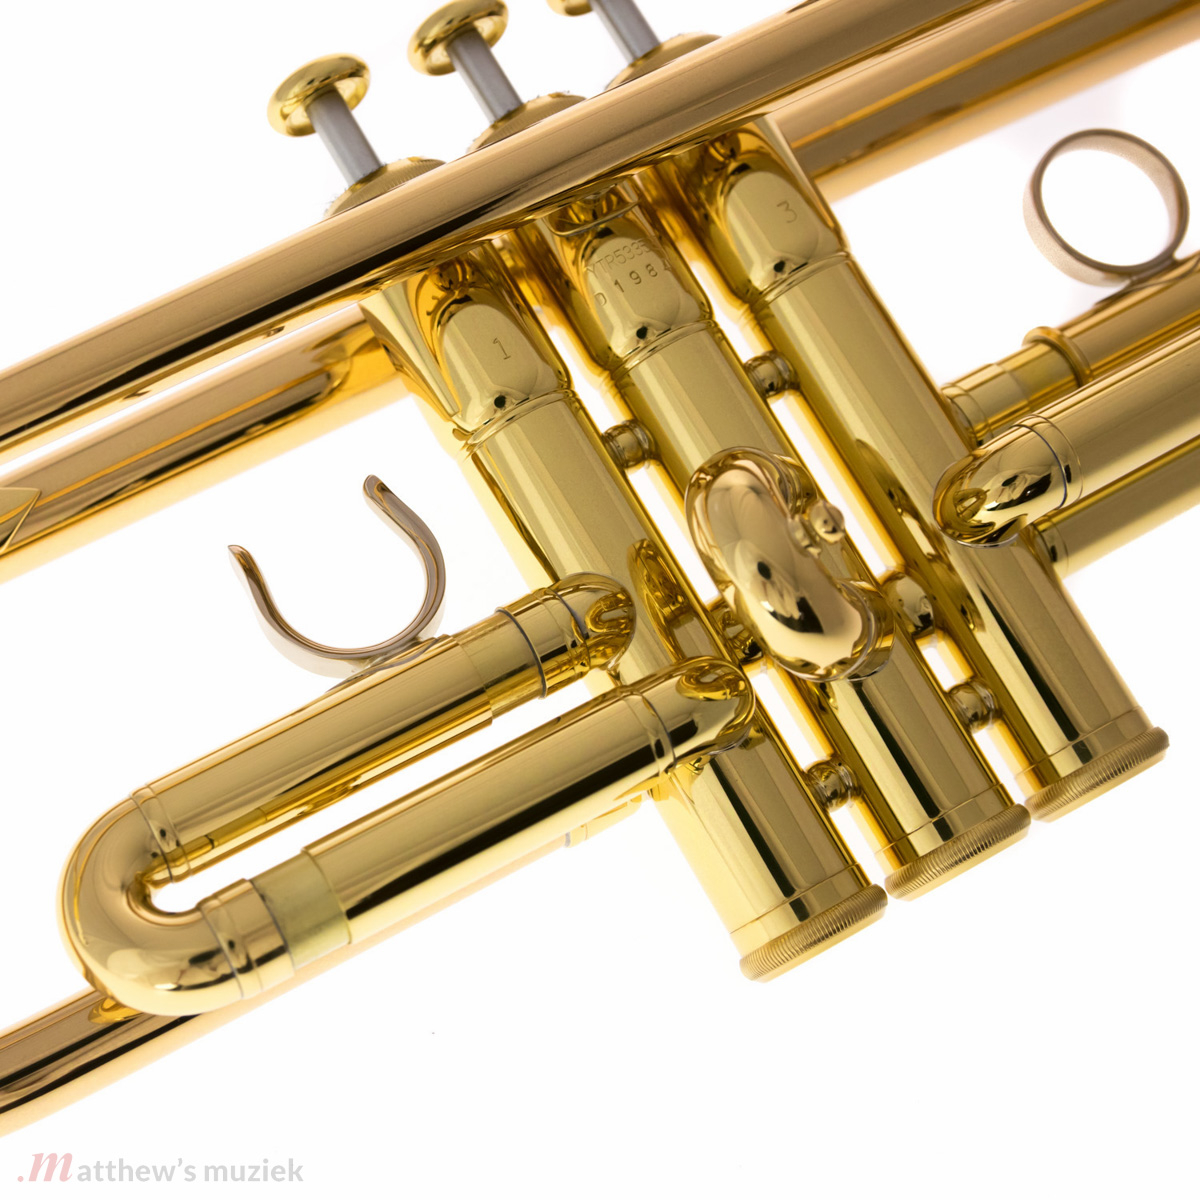 Yamaha Bb Trumpet - YTR 5335 G II